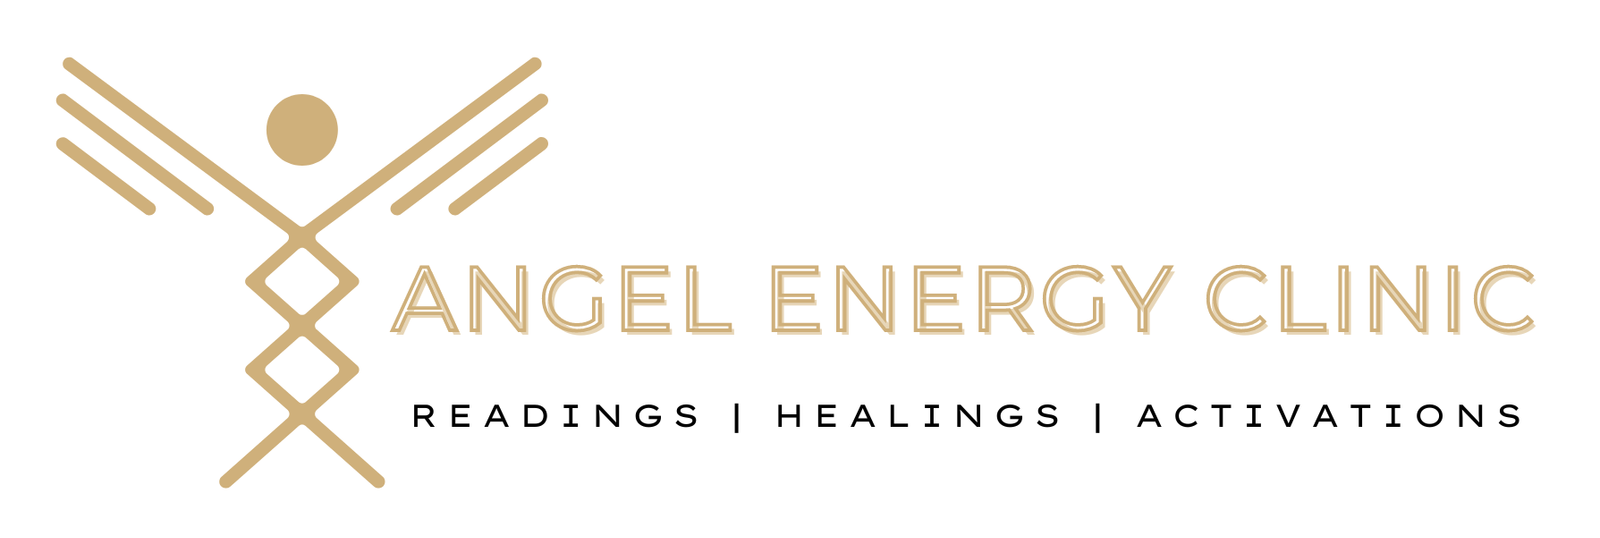 Angel Energy Clinic